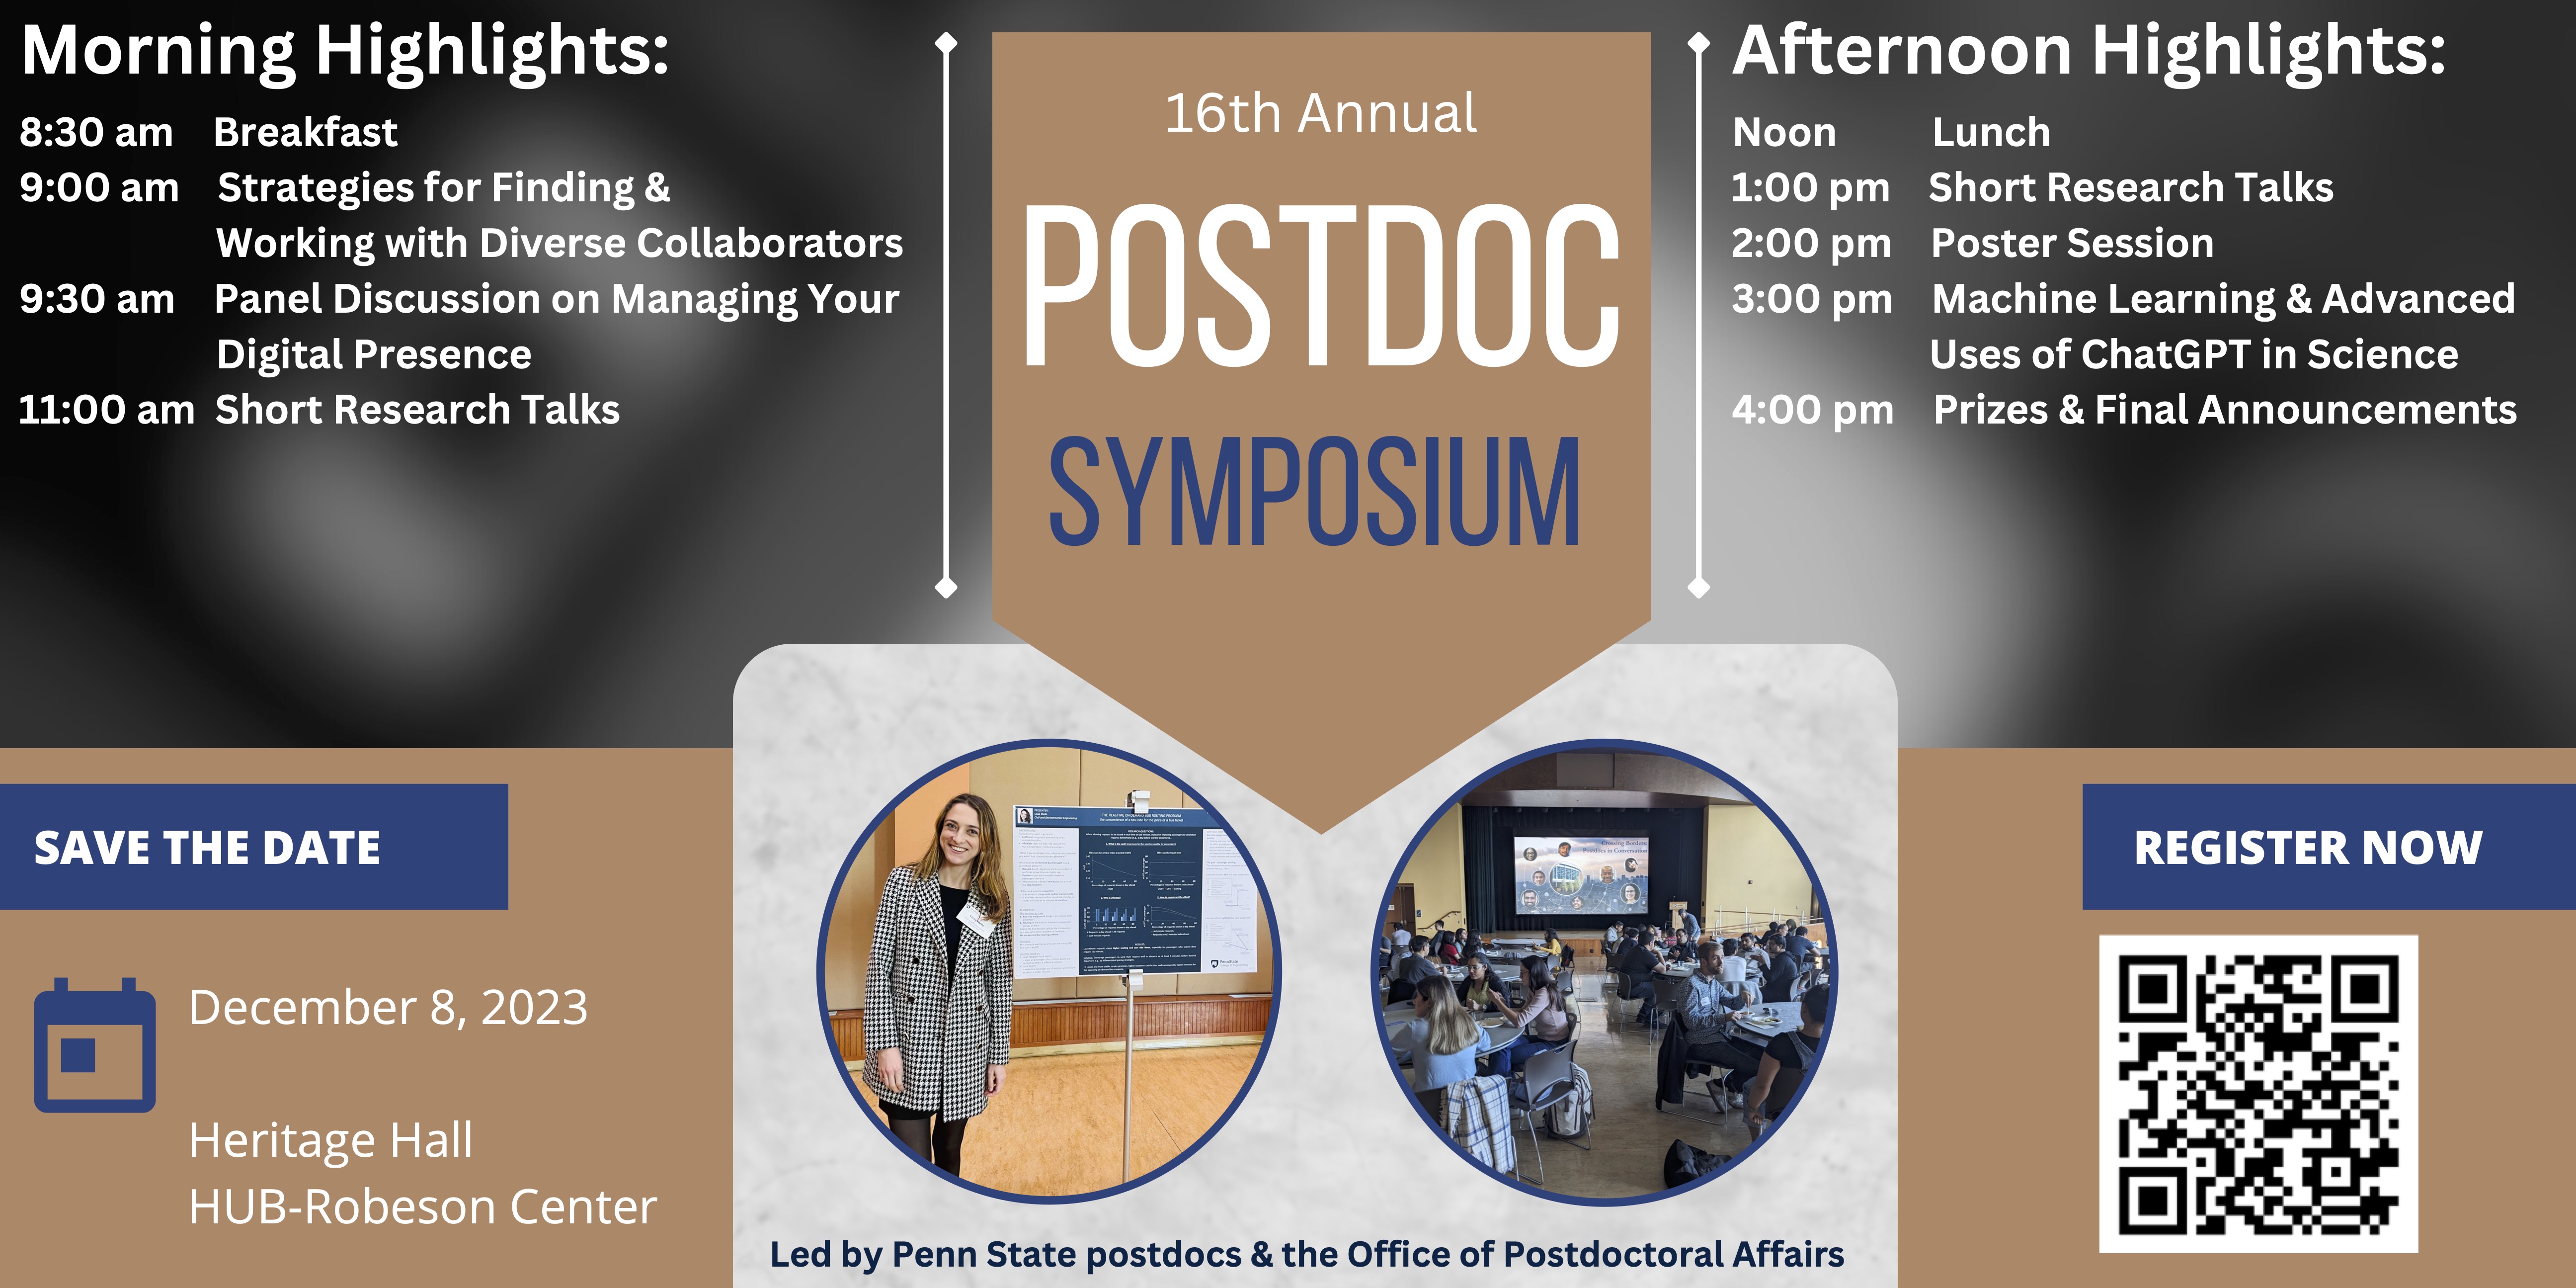 16th Annual Postdoc Research Symposium flier